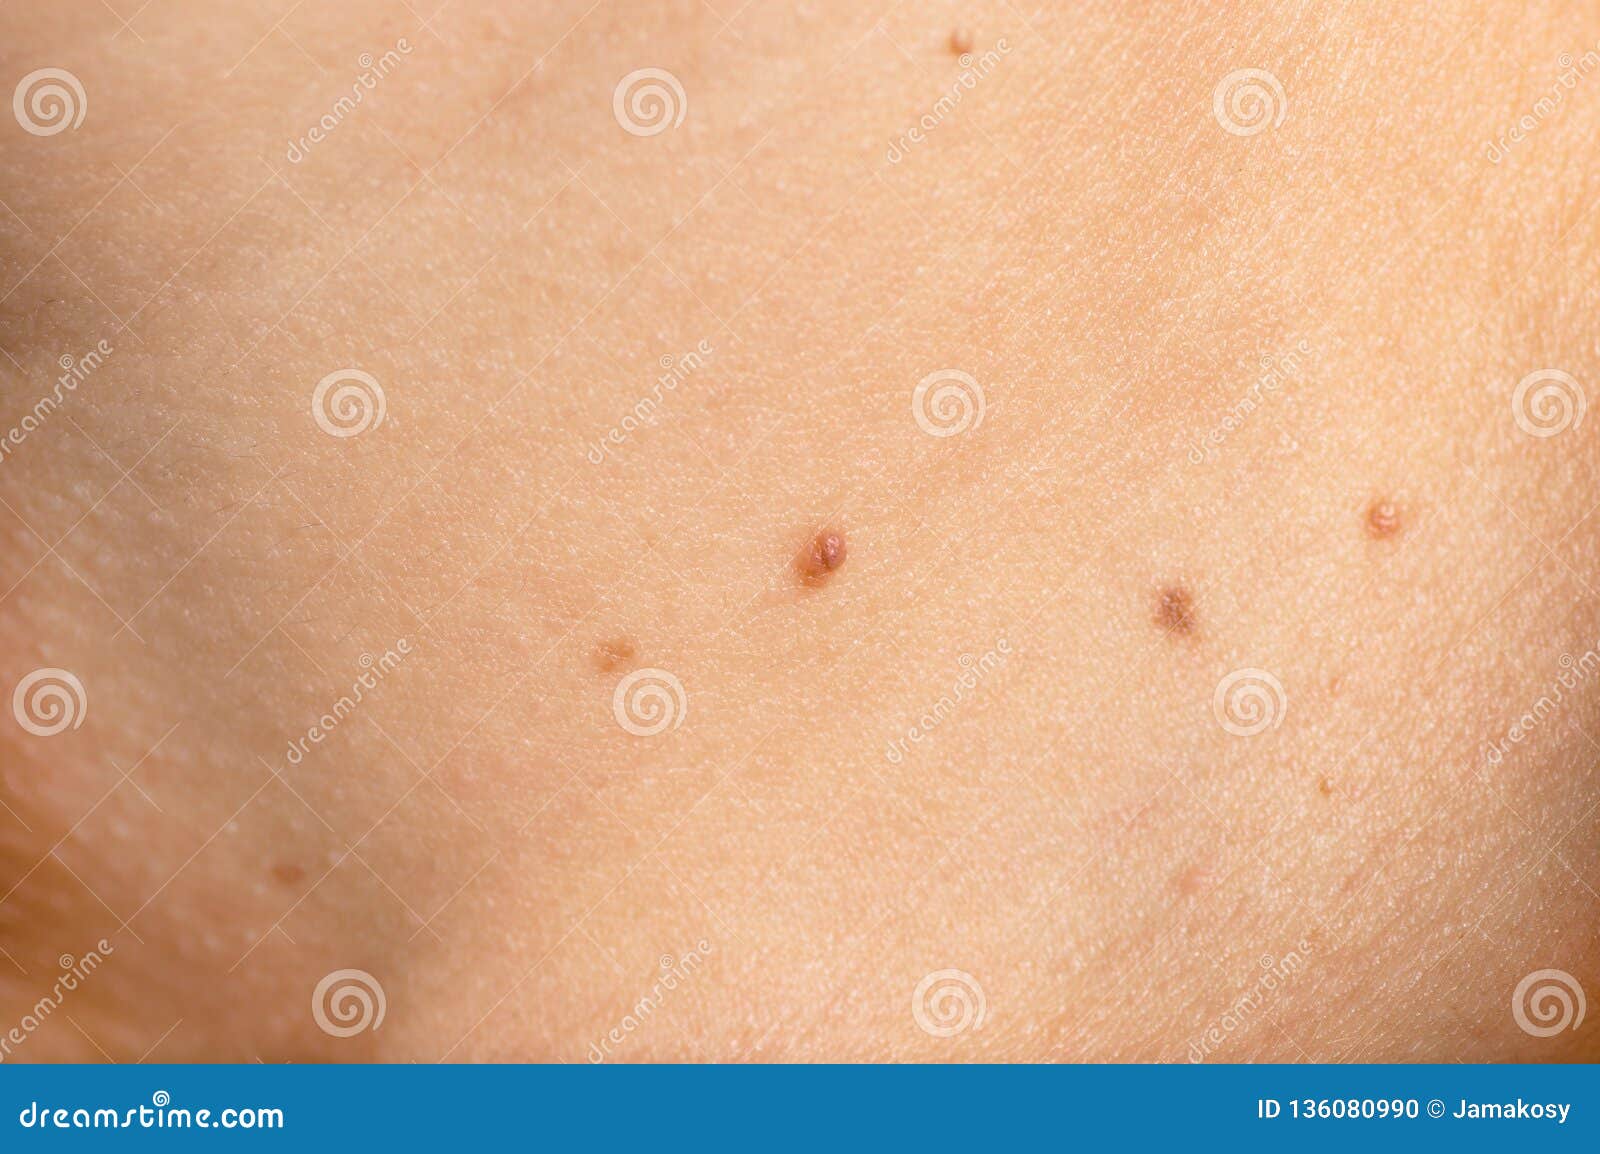 Papillomas mole. Hpv causes moles, Warts and skin cancer